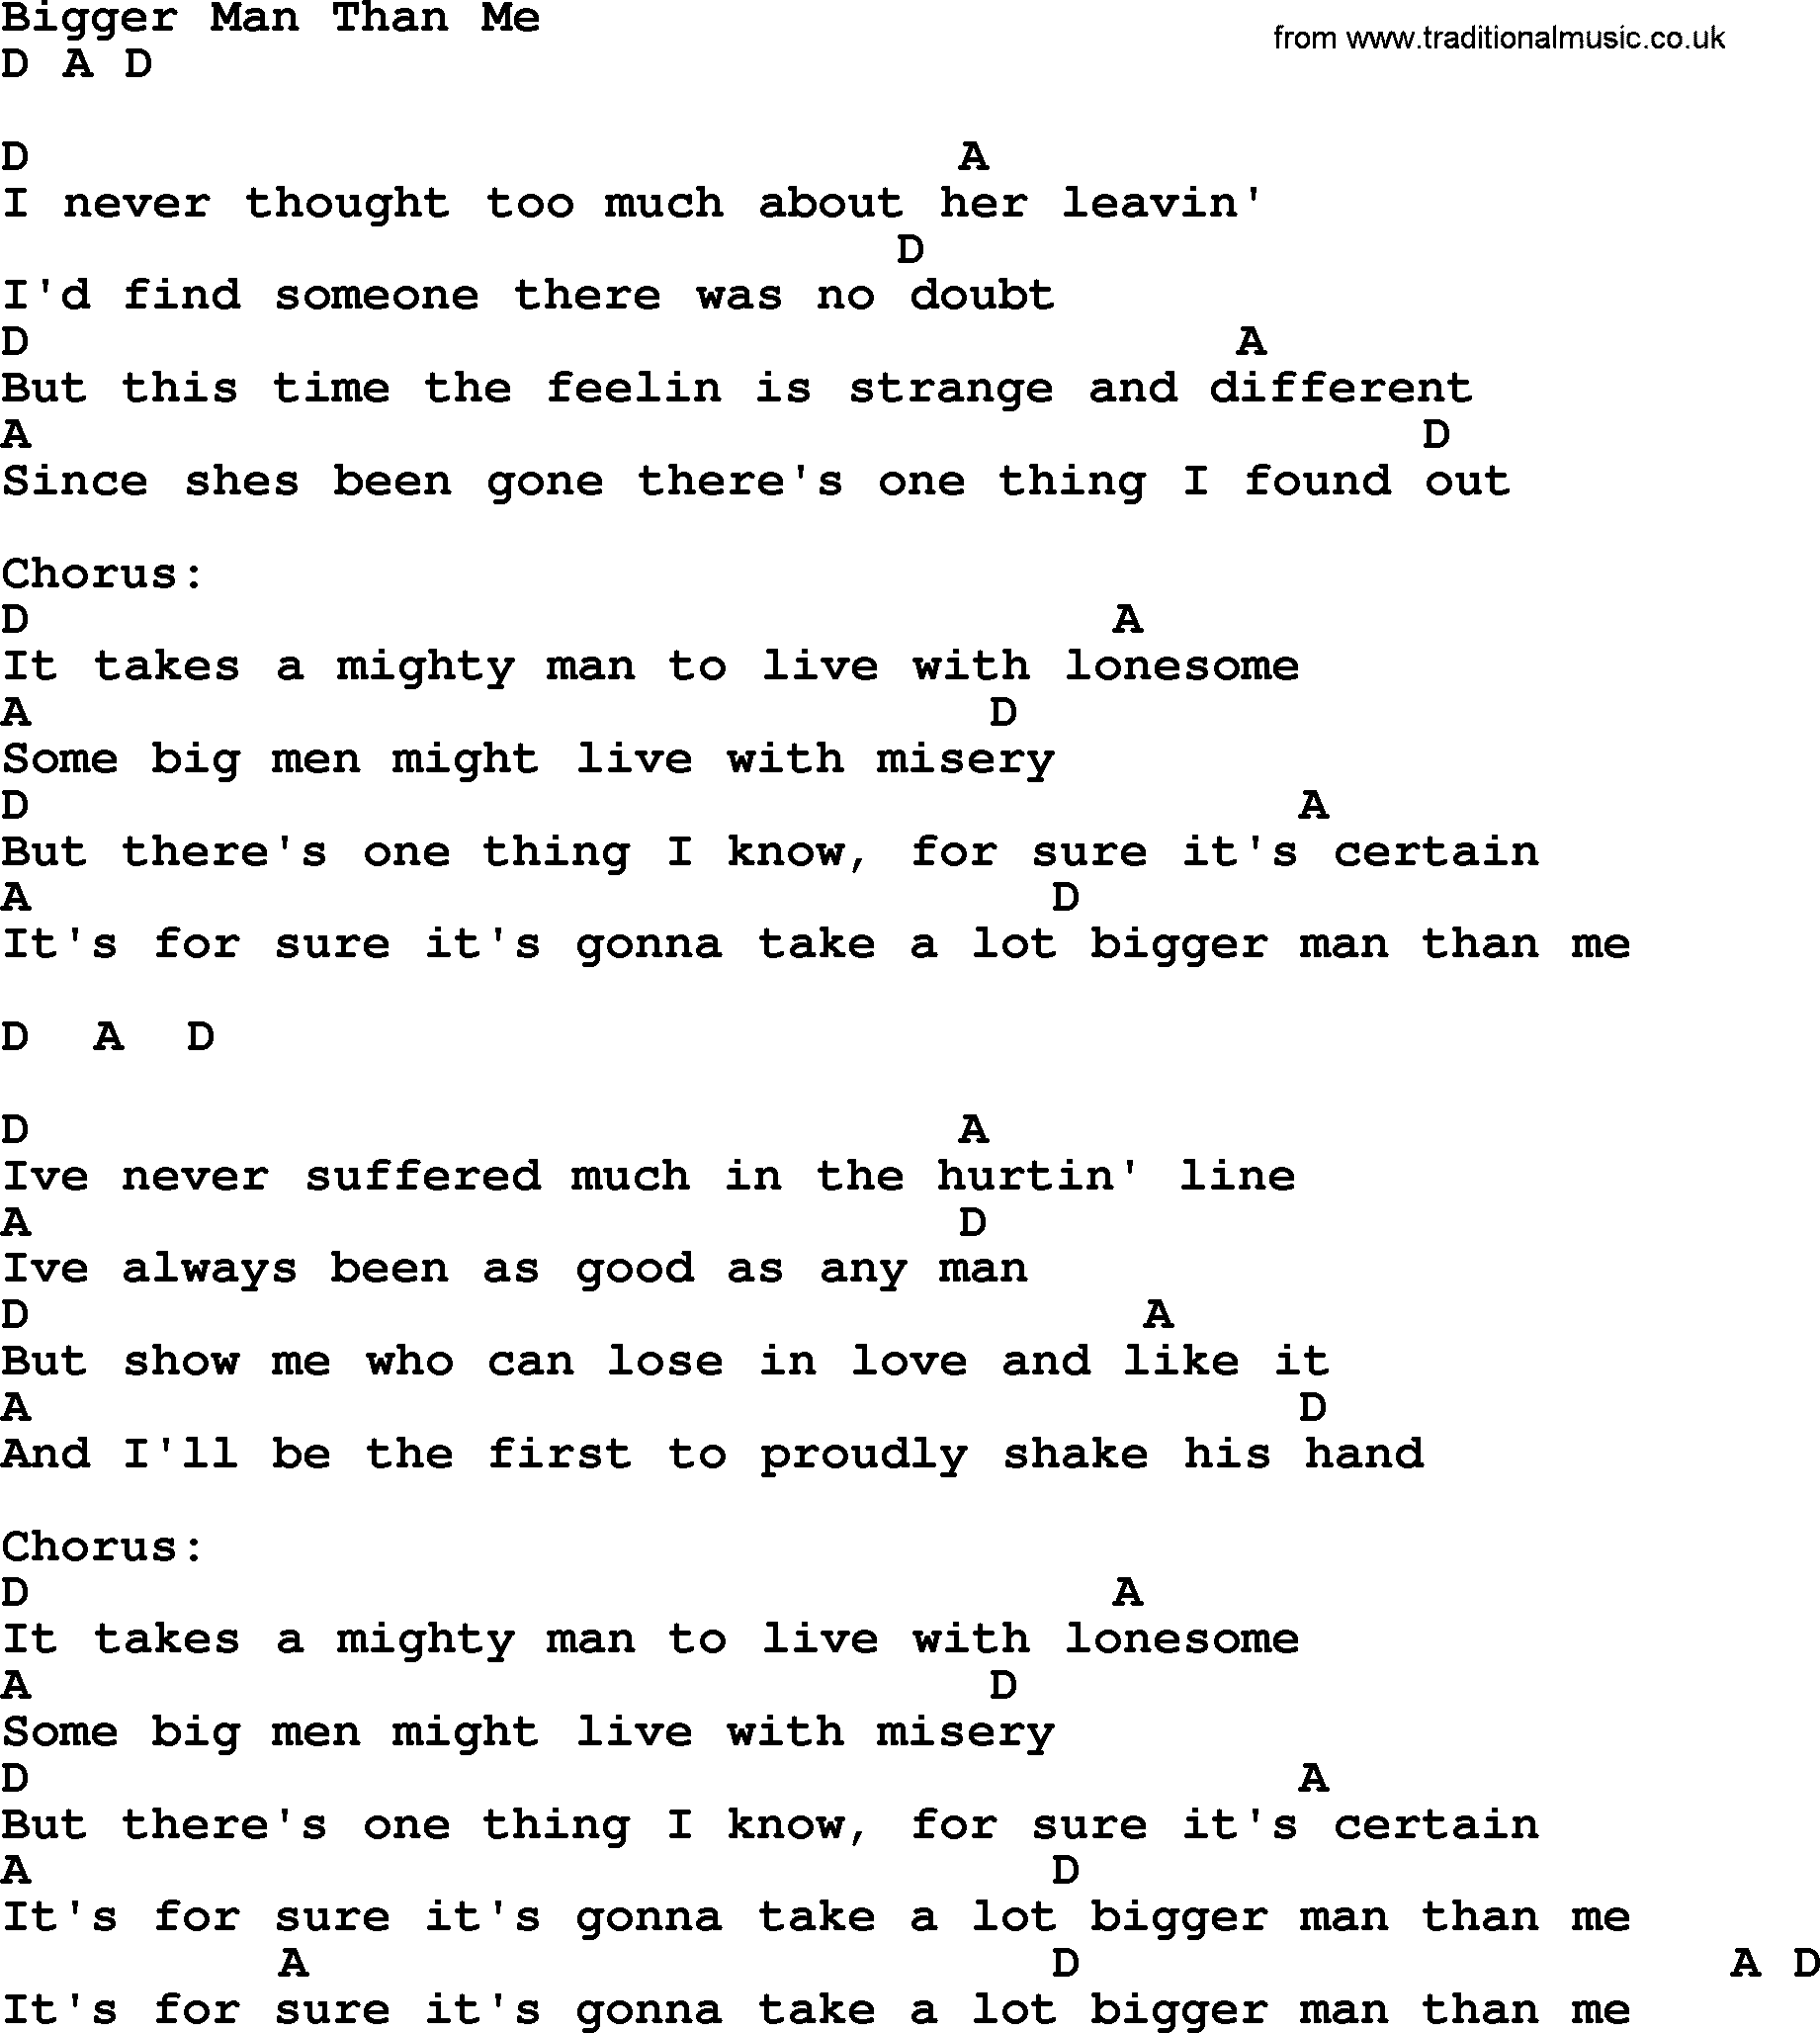 George Strait song: Bigger Man Than Me, lyrics and chords